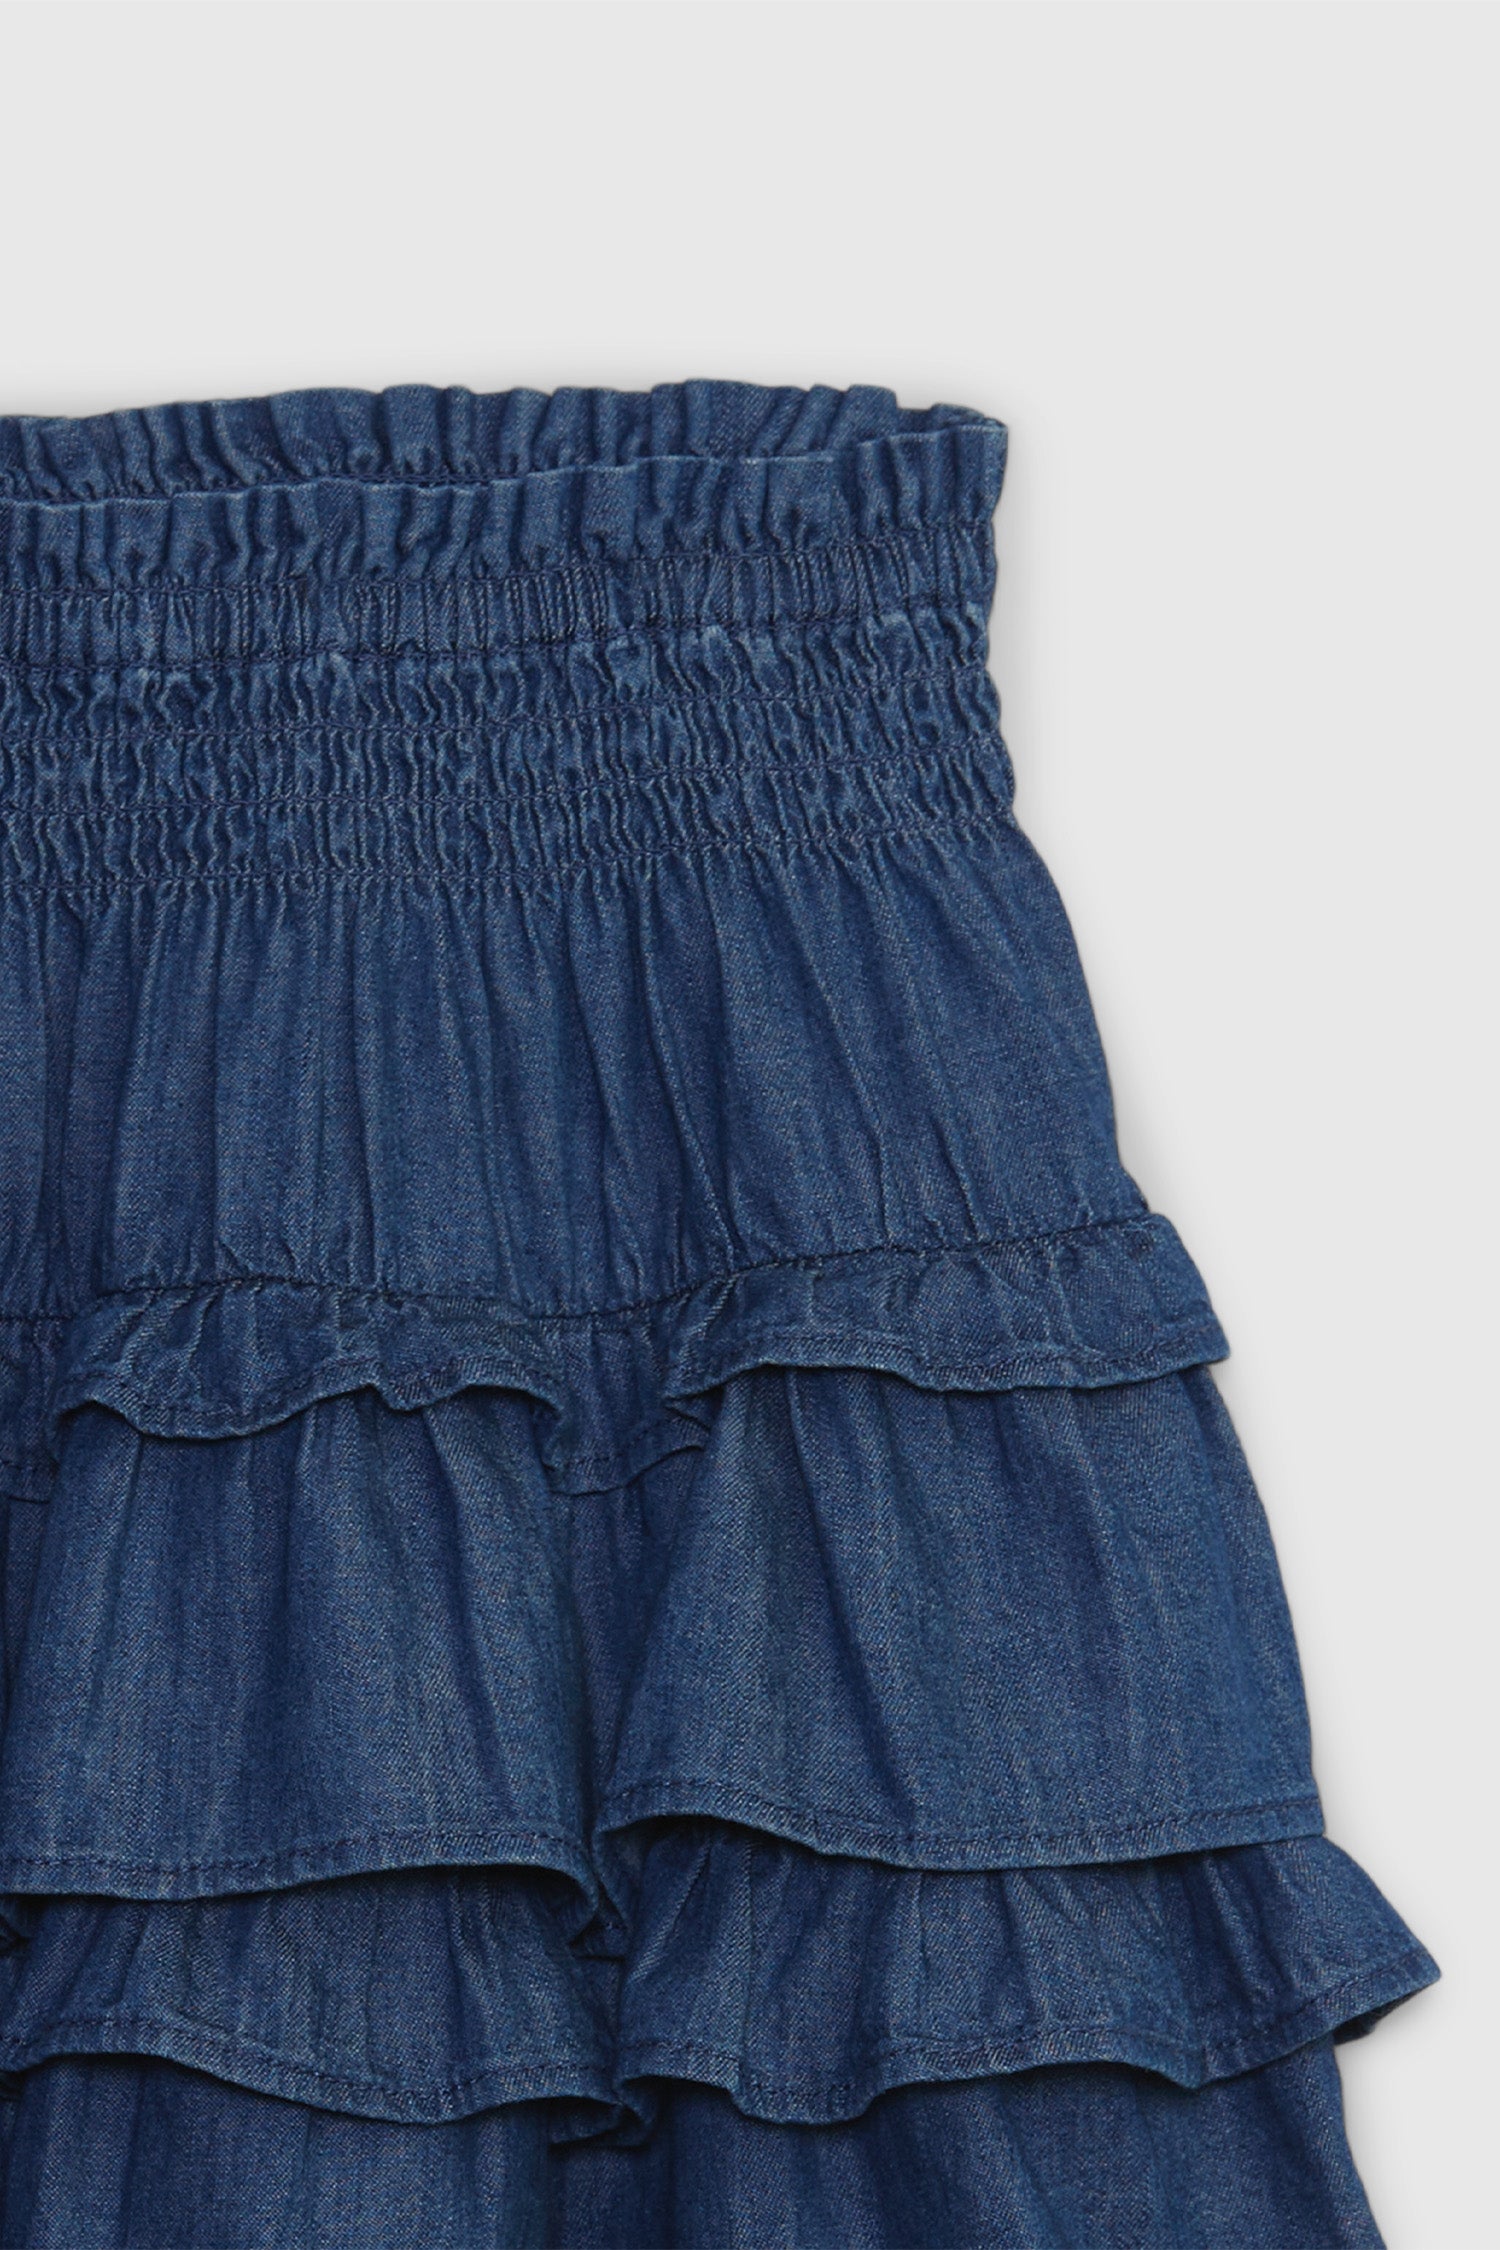 Close up image detailing waist on kids denim ruffle mini skirt with smocked waist and ruffle skirt